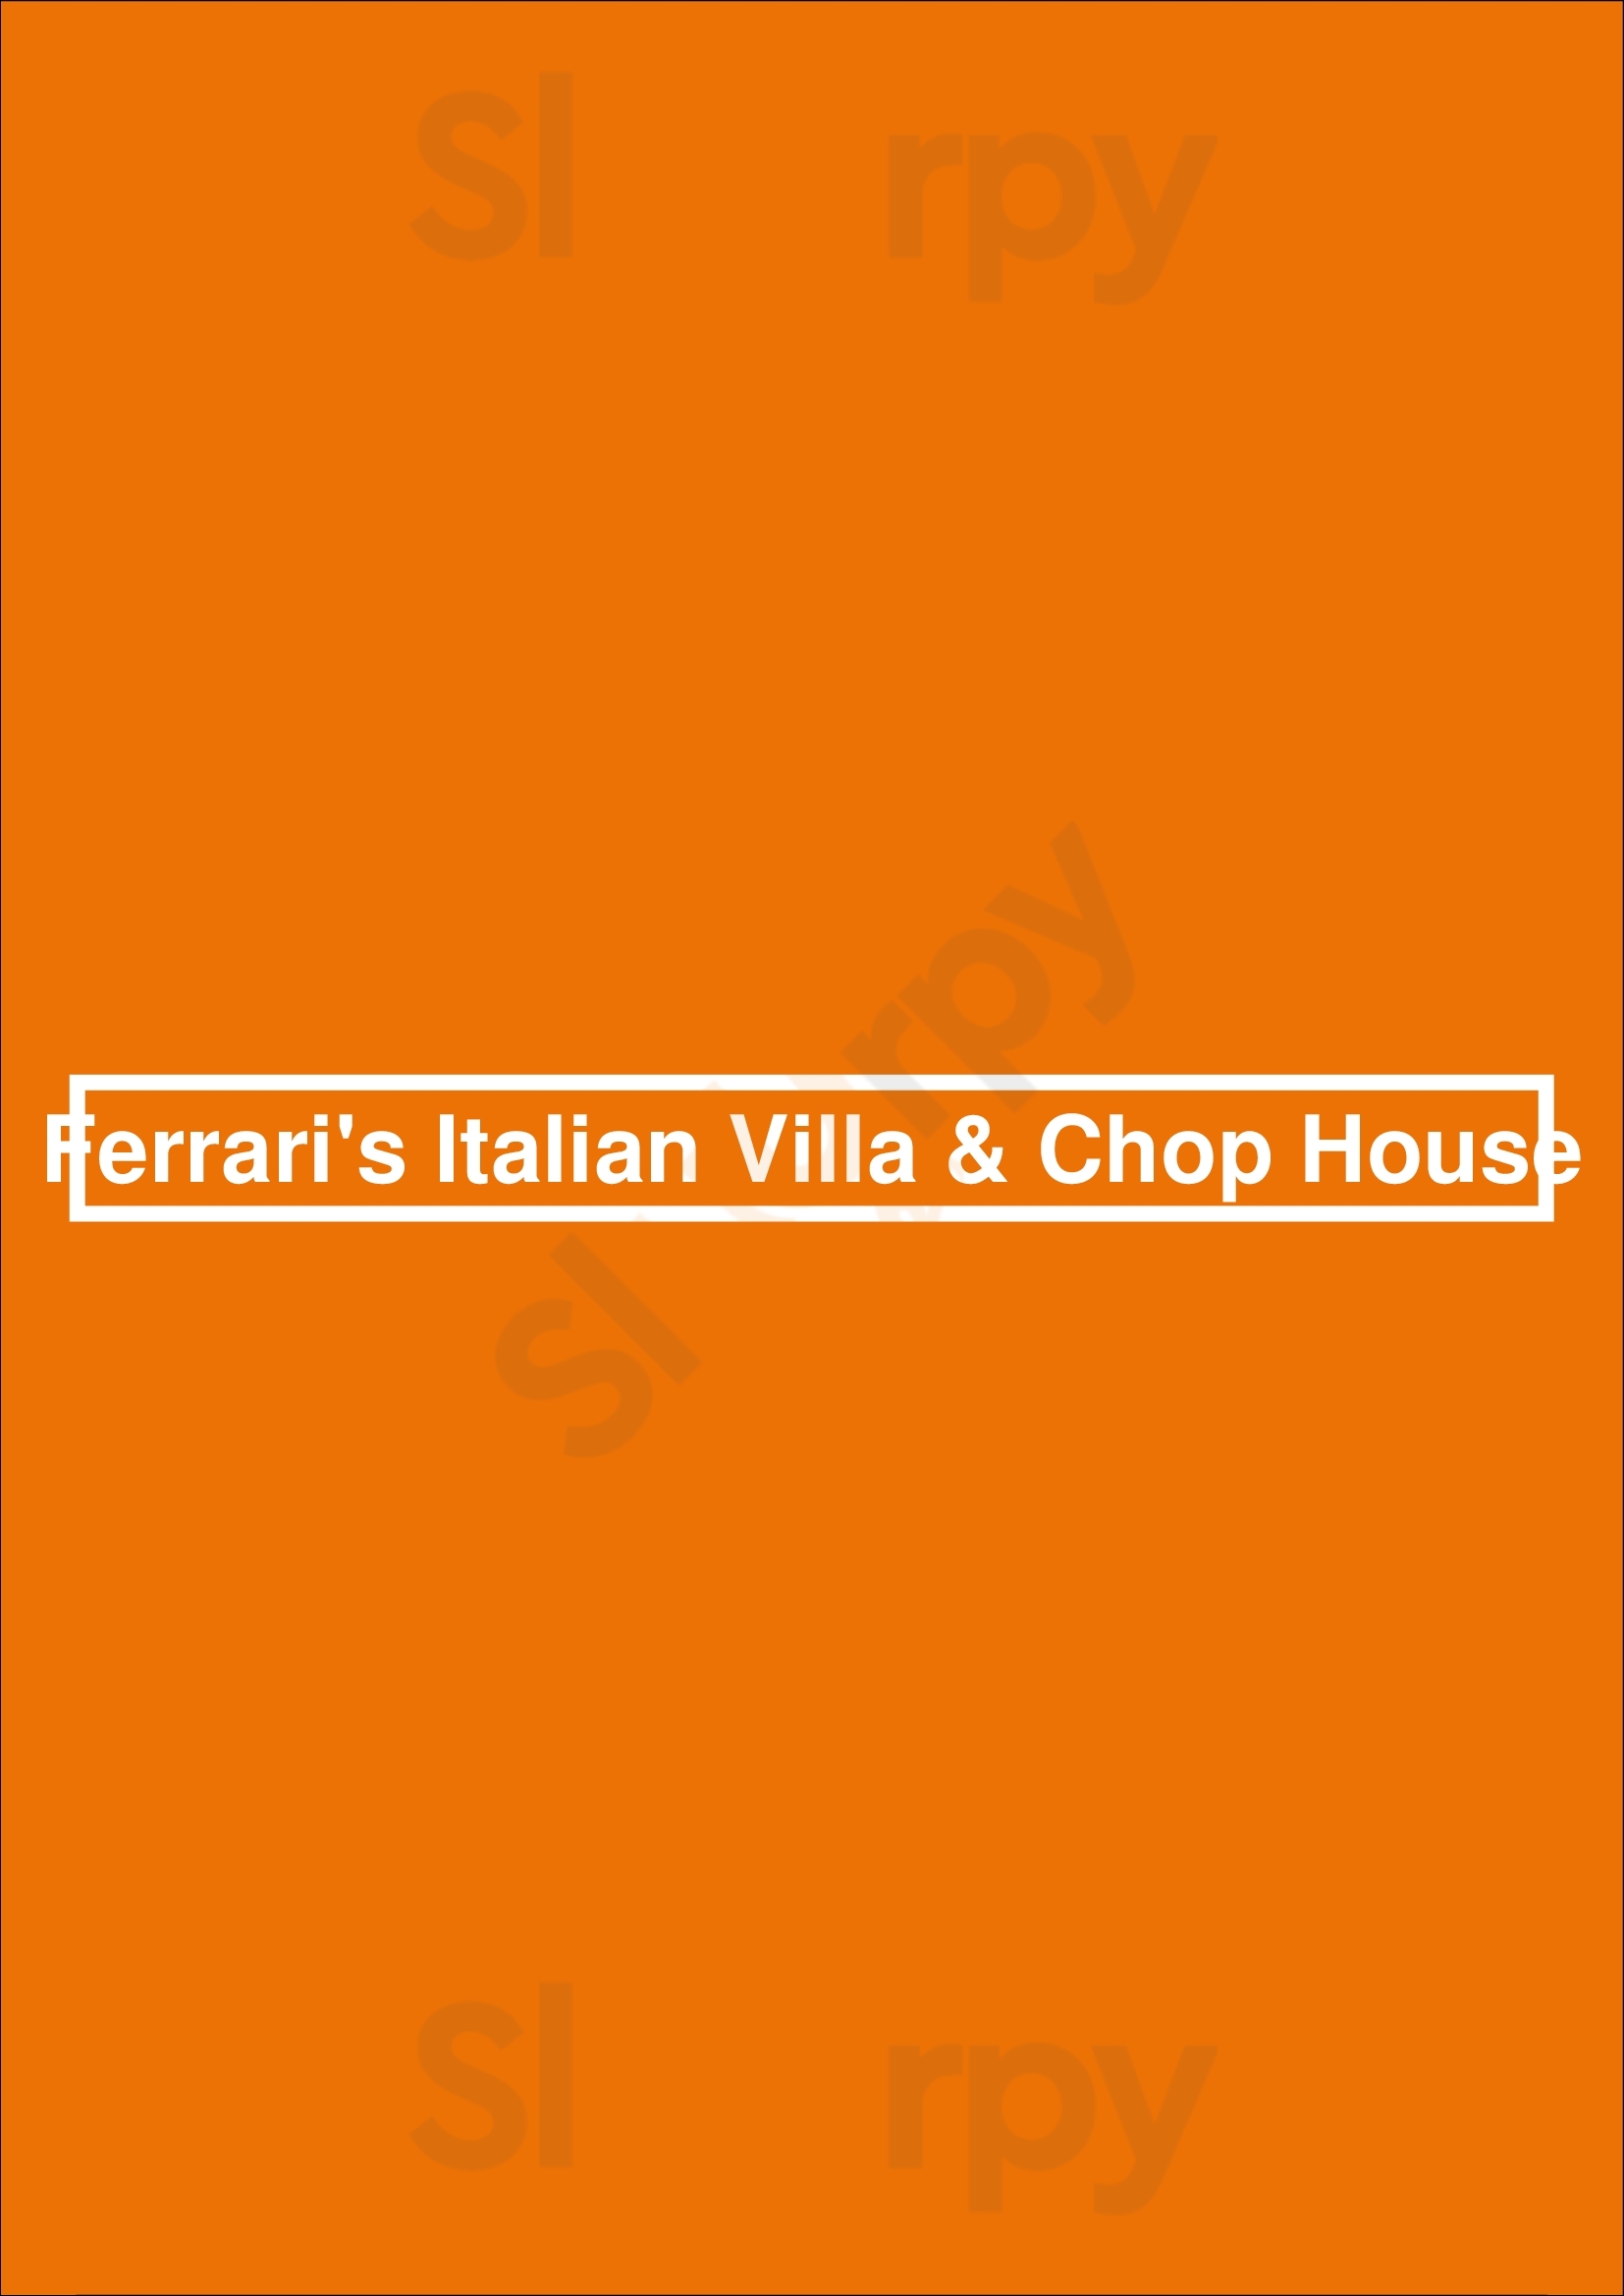 Ferrari's Italian Villa & Chop House Addison Menu - 1